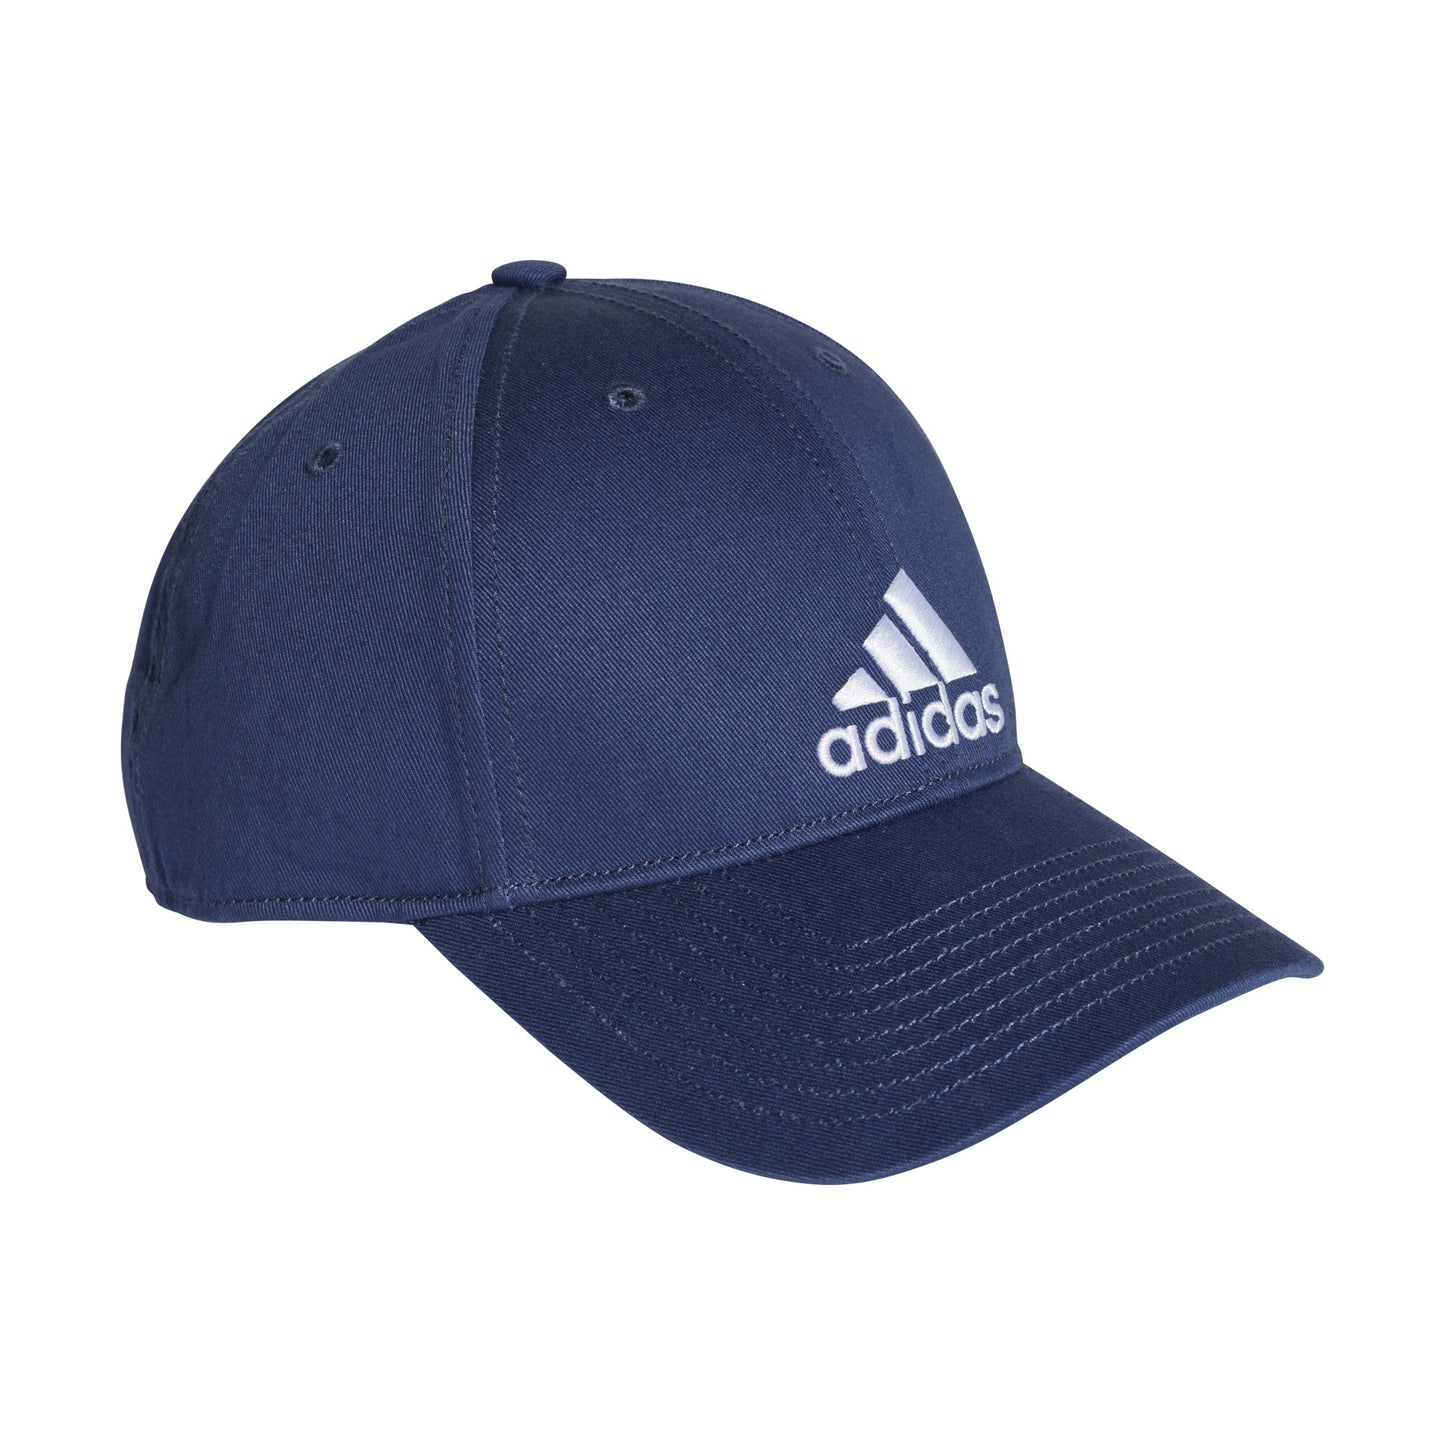 Adidas Baseball 6 panel cap Hat Black and Navy youths adjustable size